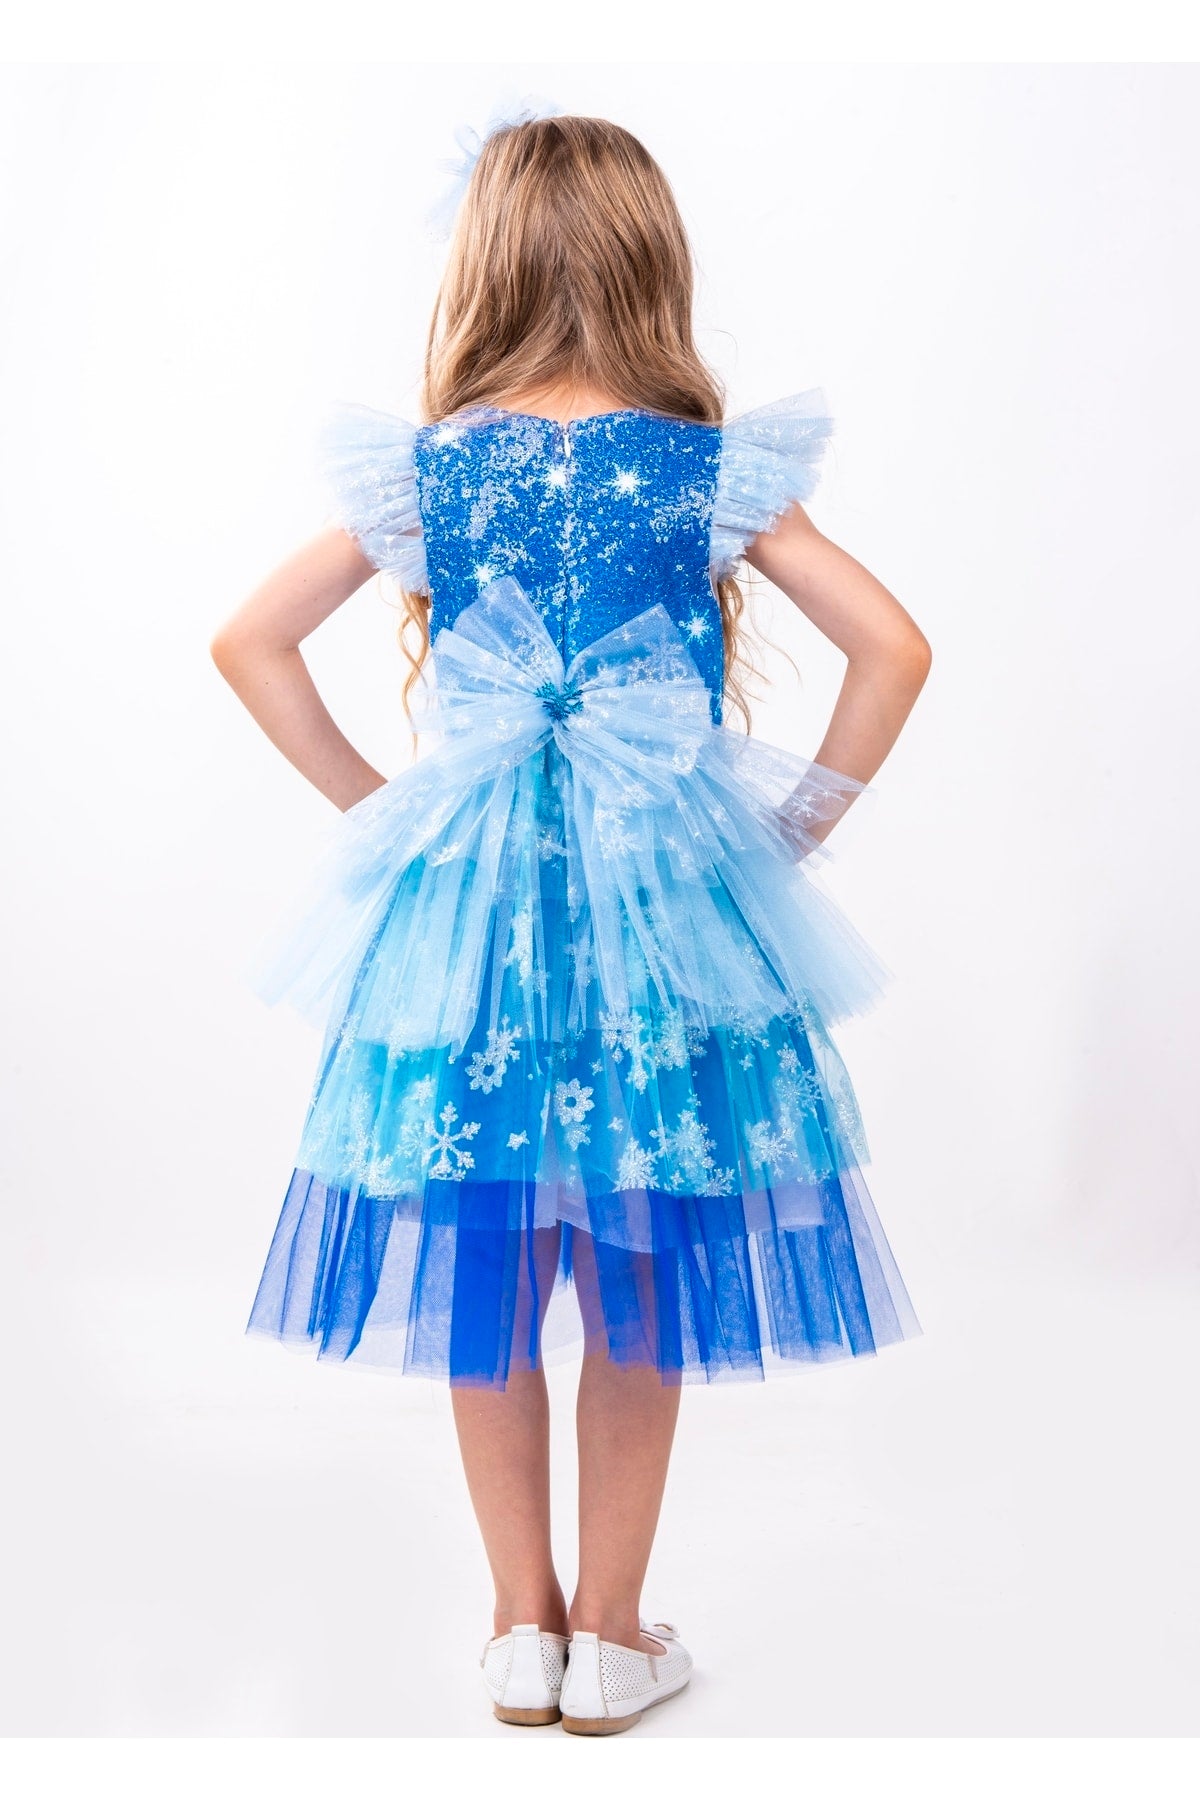 Sequin Printed Elsa Snow Queen Girl Party Dress